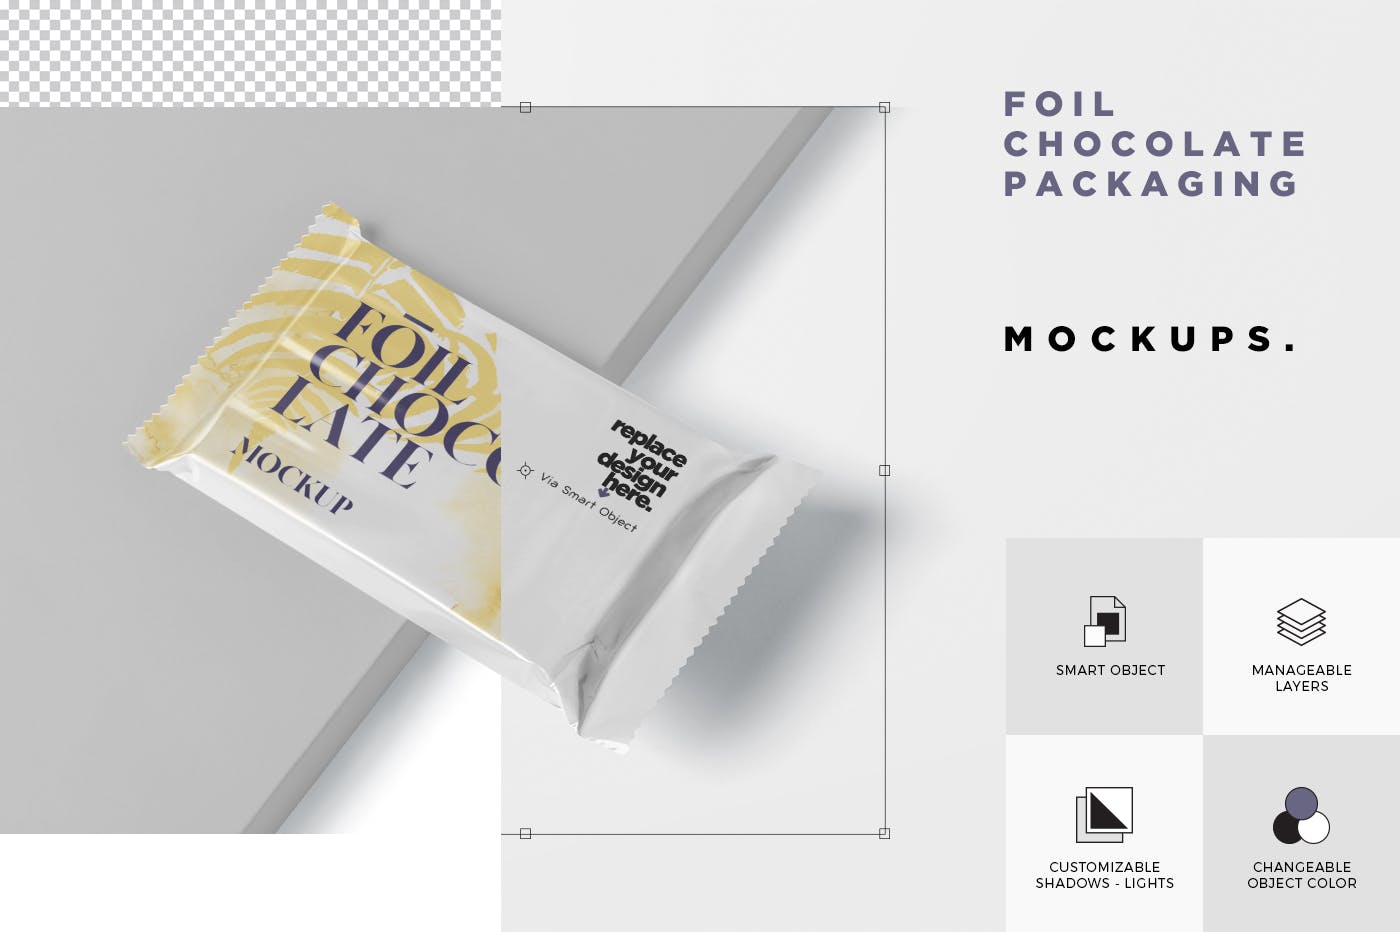 巧克力超薄铝箔纸包装设计效果图素材中国精选 Foil Chocolate Packaging Mockup – Slim Size插图(5)